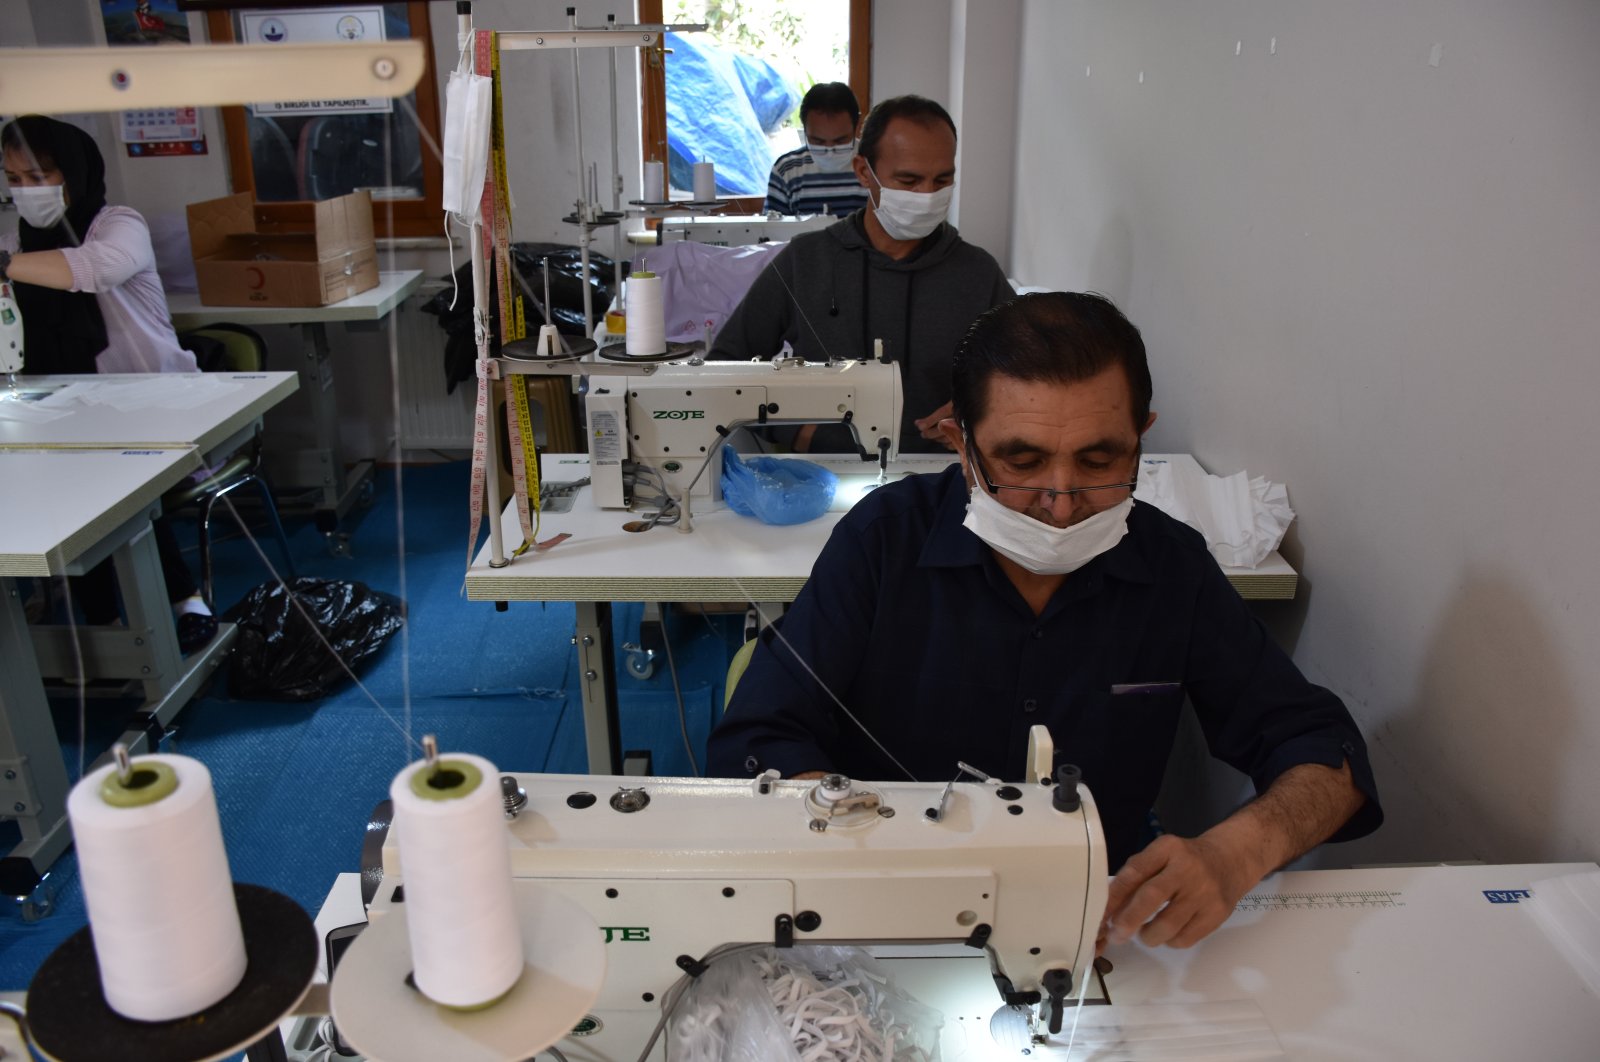 Musa Hüseyni sews a mask in a workshop, in Trabzon, Turkey, June 10, 2020. (AA Photo)